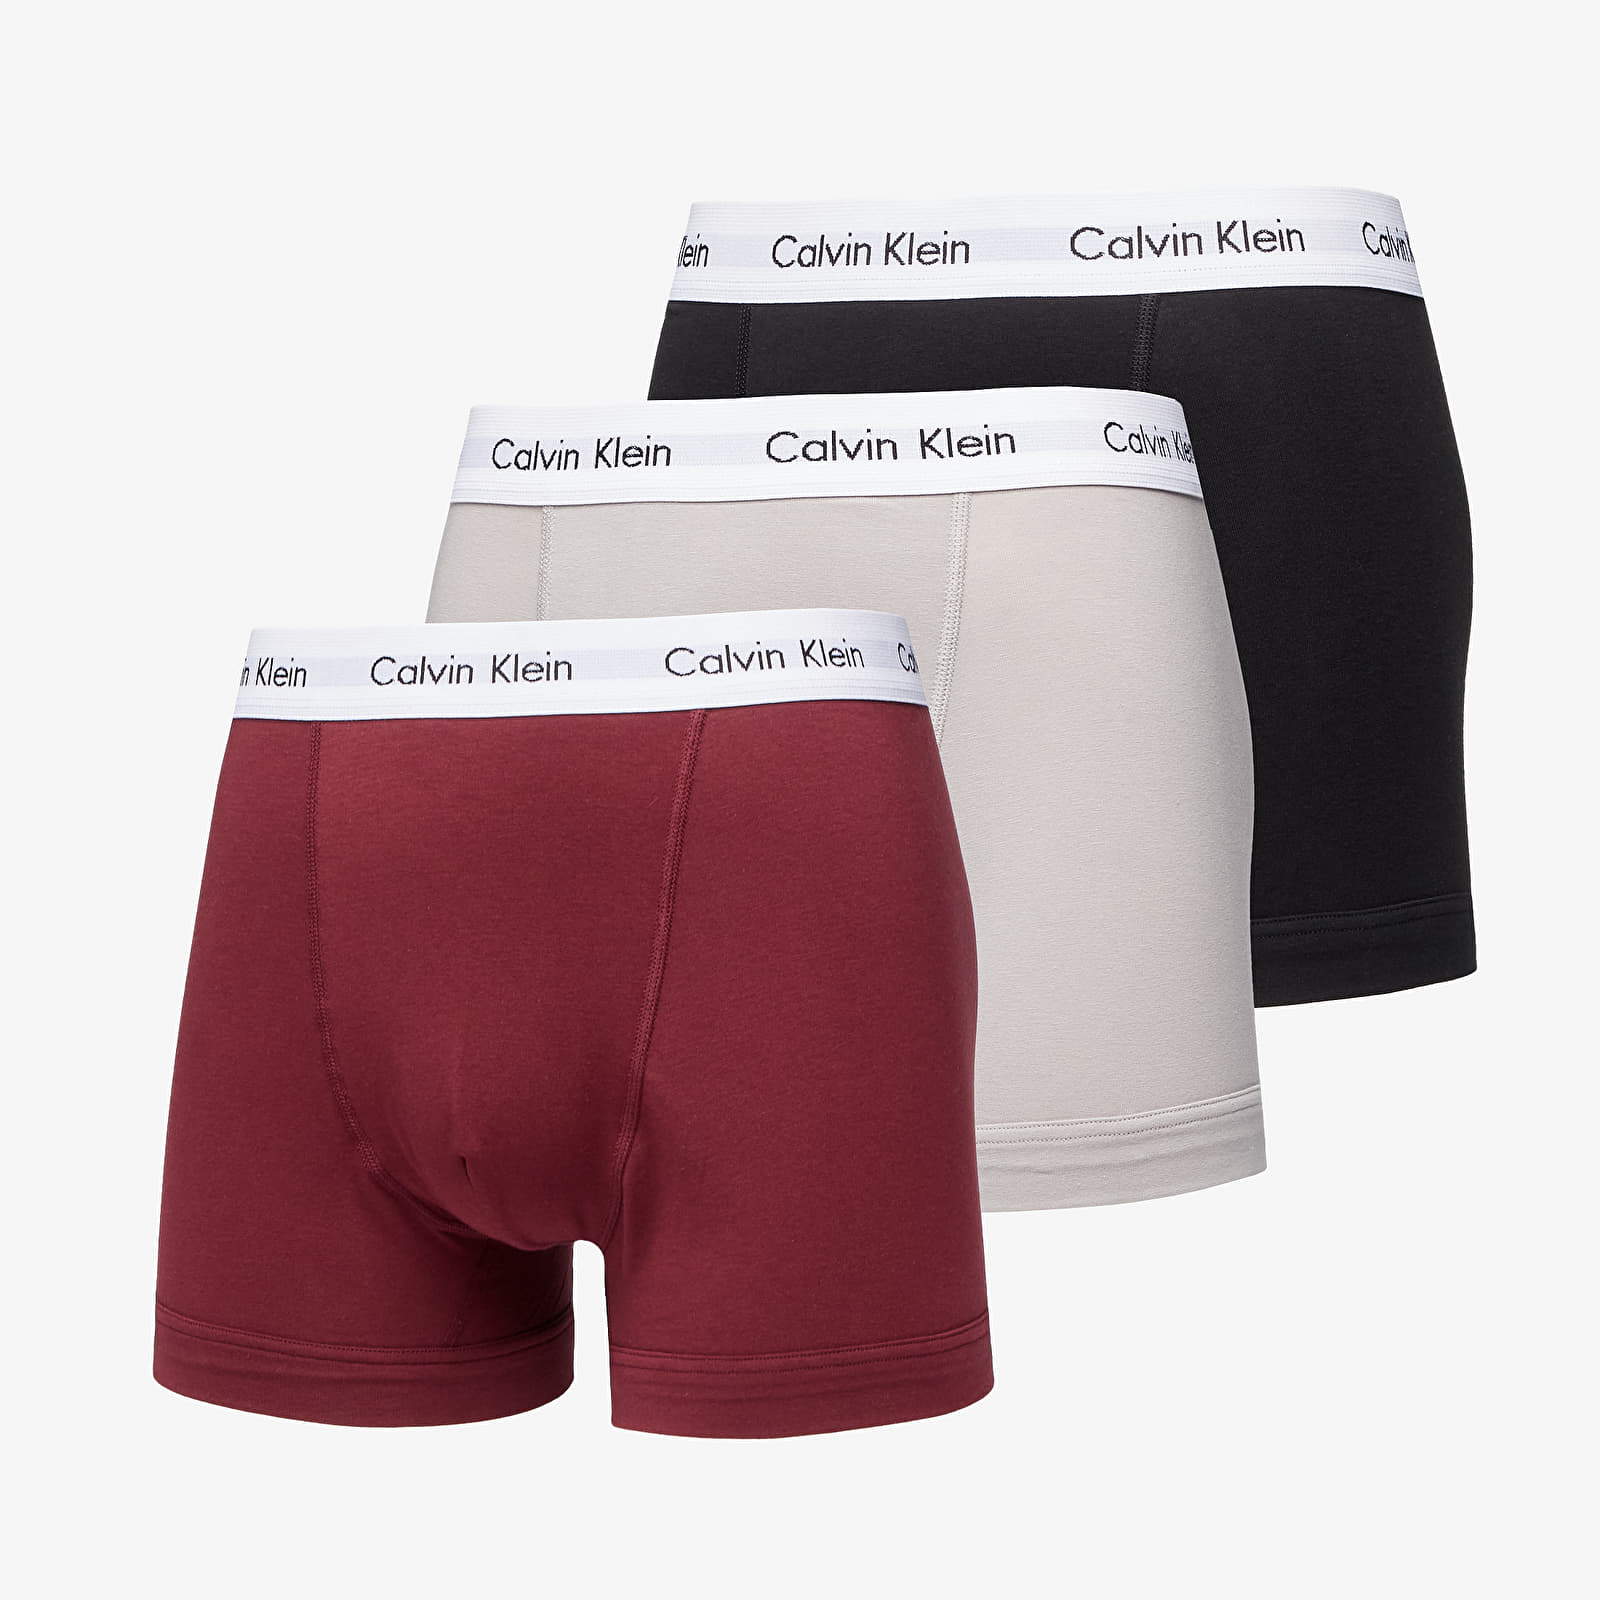 Boxer shorts Calvin Klein Cotton Stretch Trunk 3-Pack Multicolor